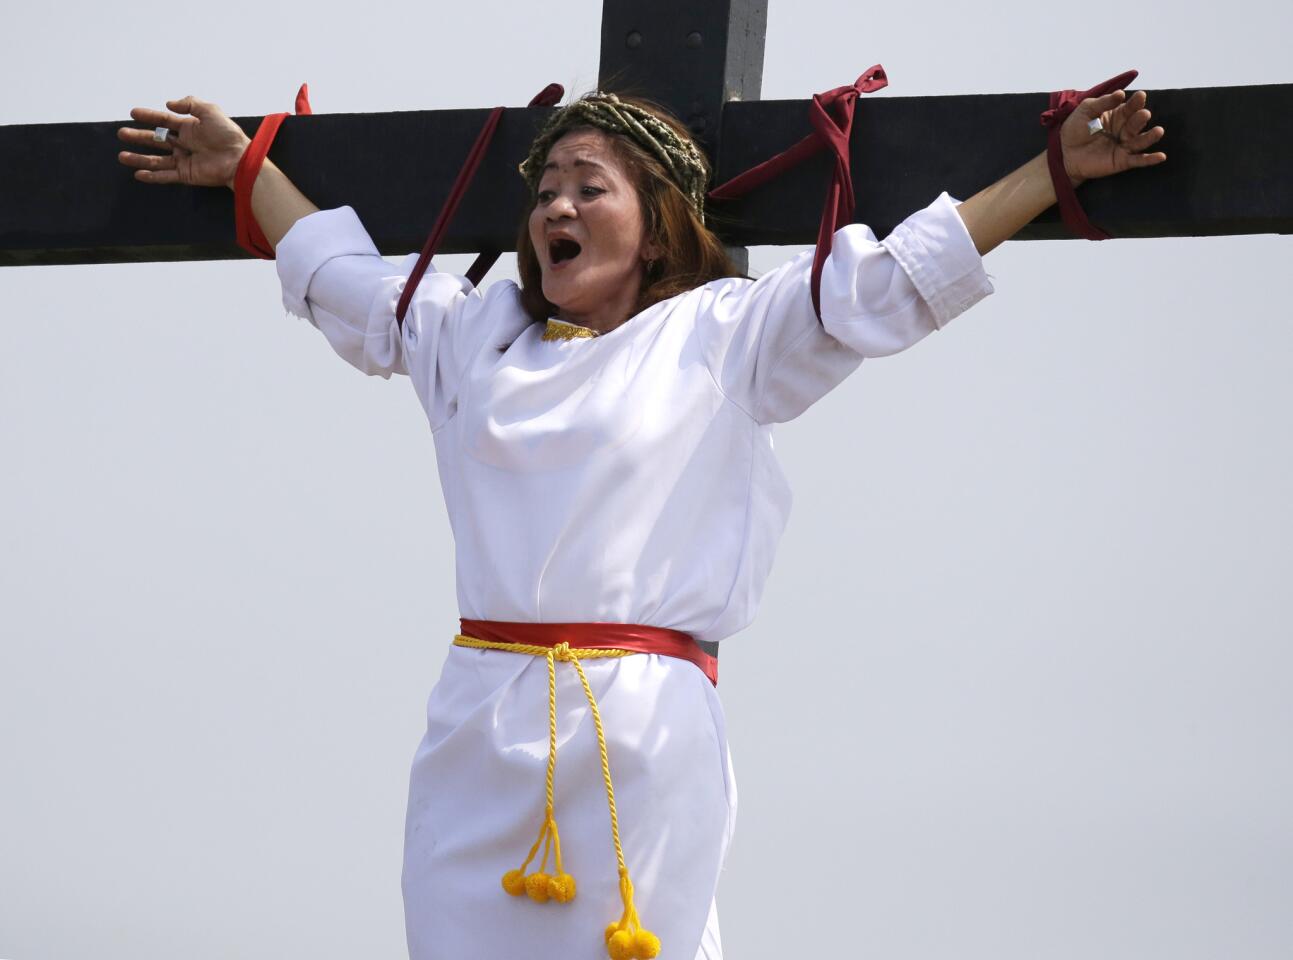 Philippines crucifixion reenactment